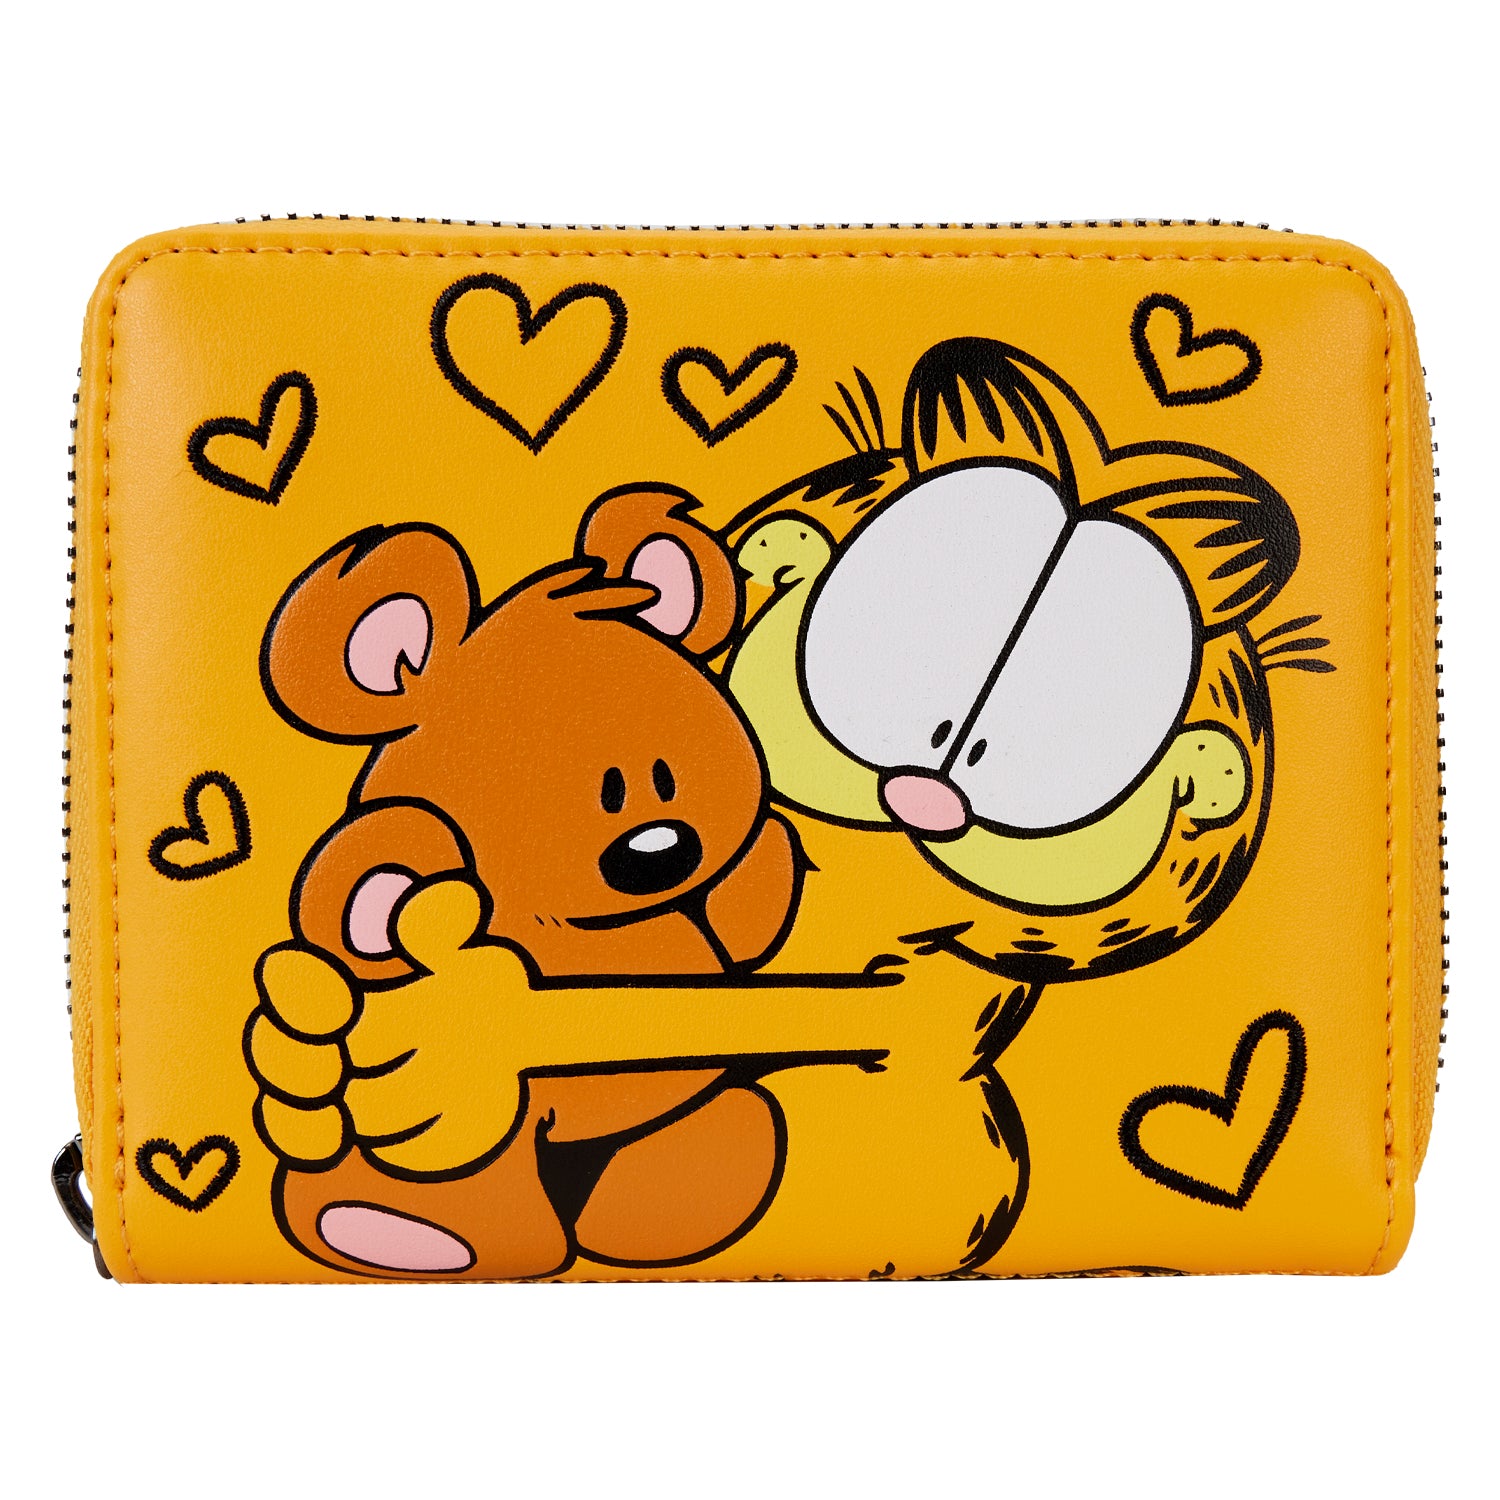 Nickelodeon | Garfield and Pooky Zip Around Wallet